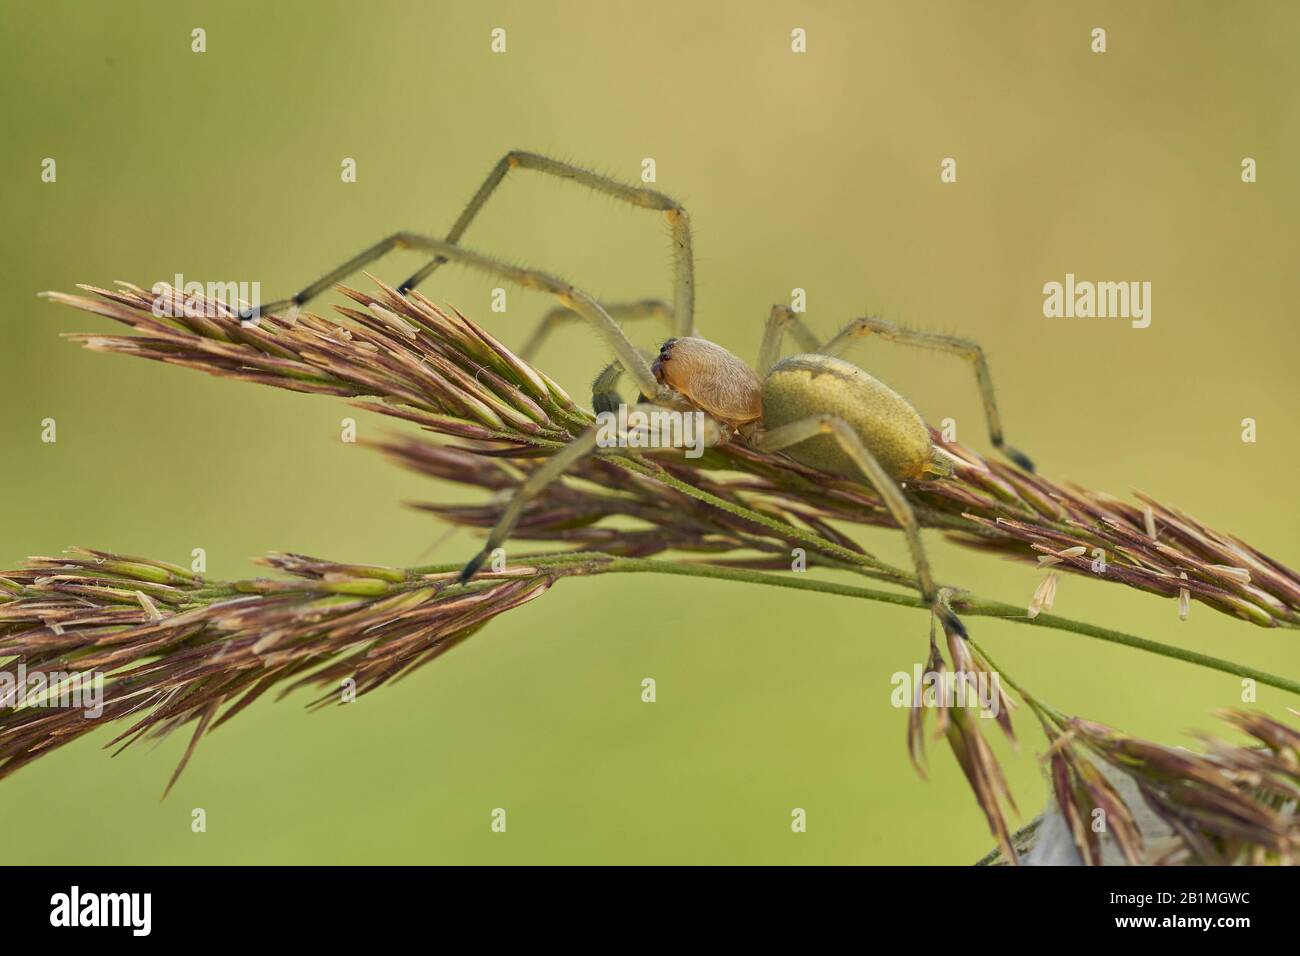 Yellow sac spider Cheiracanthium punctorium in Czech Republic Stock Photo